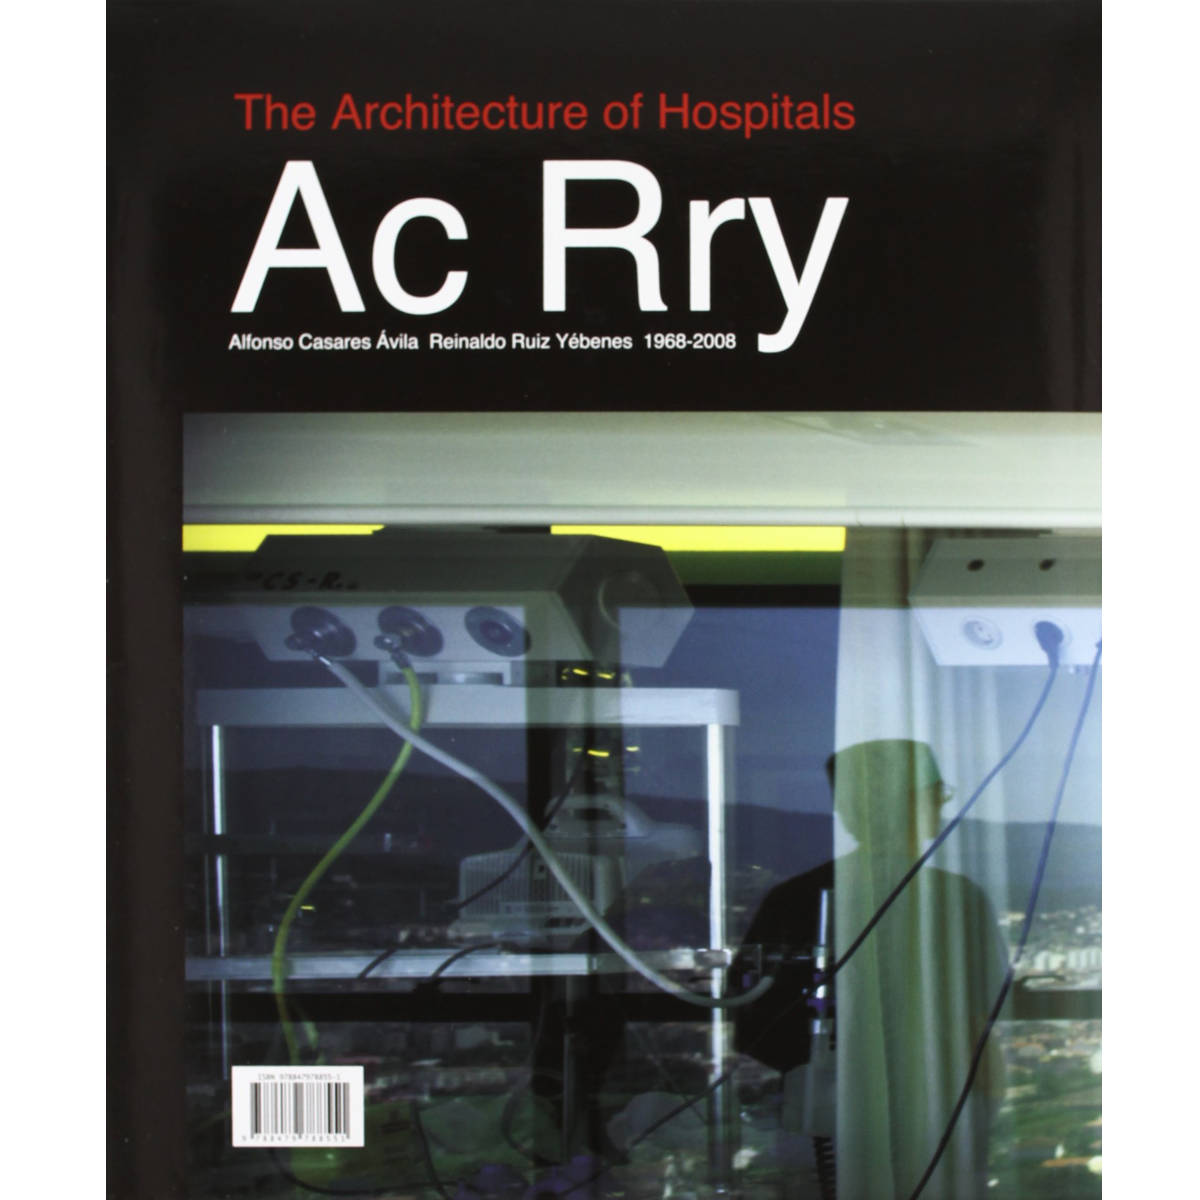 La arquitectura del hospital Ac Rry 1968-2008